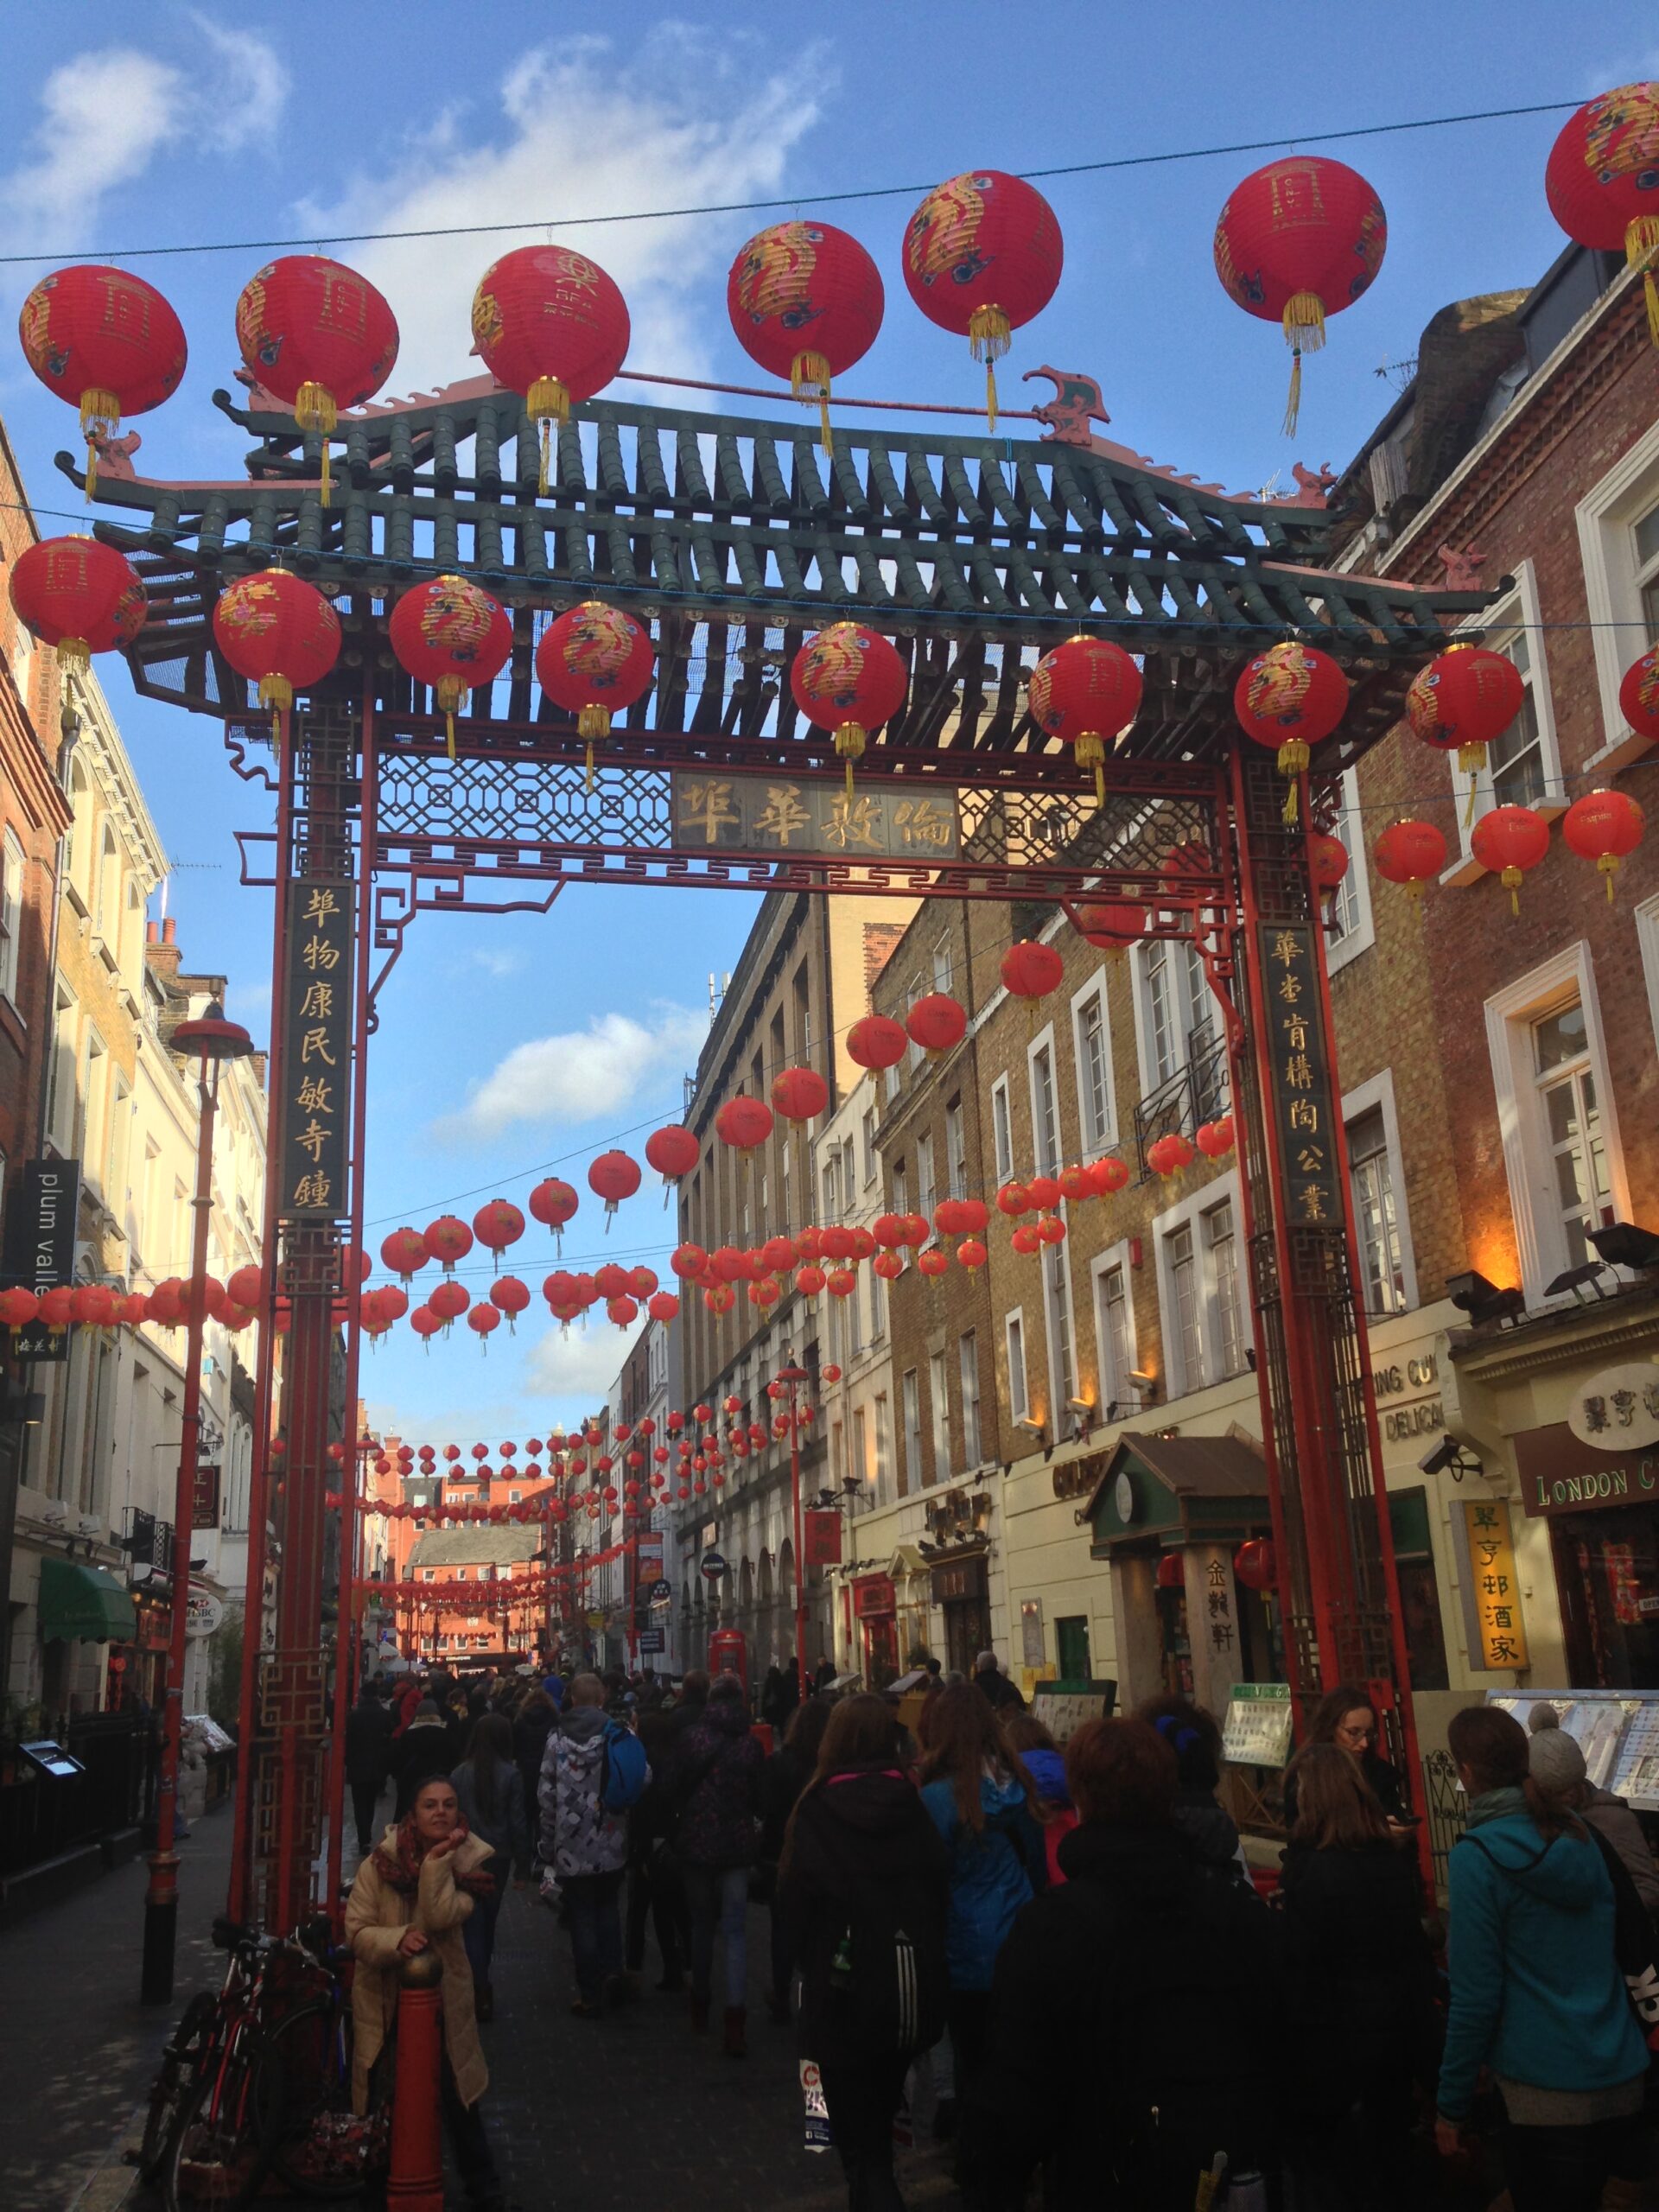 Chinese lanterns hang over Gerrard Street in London.